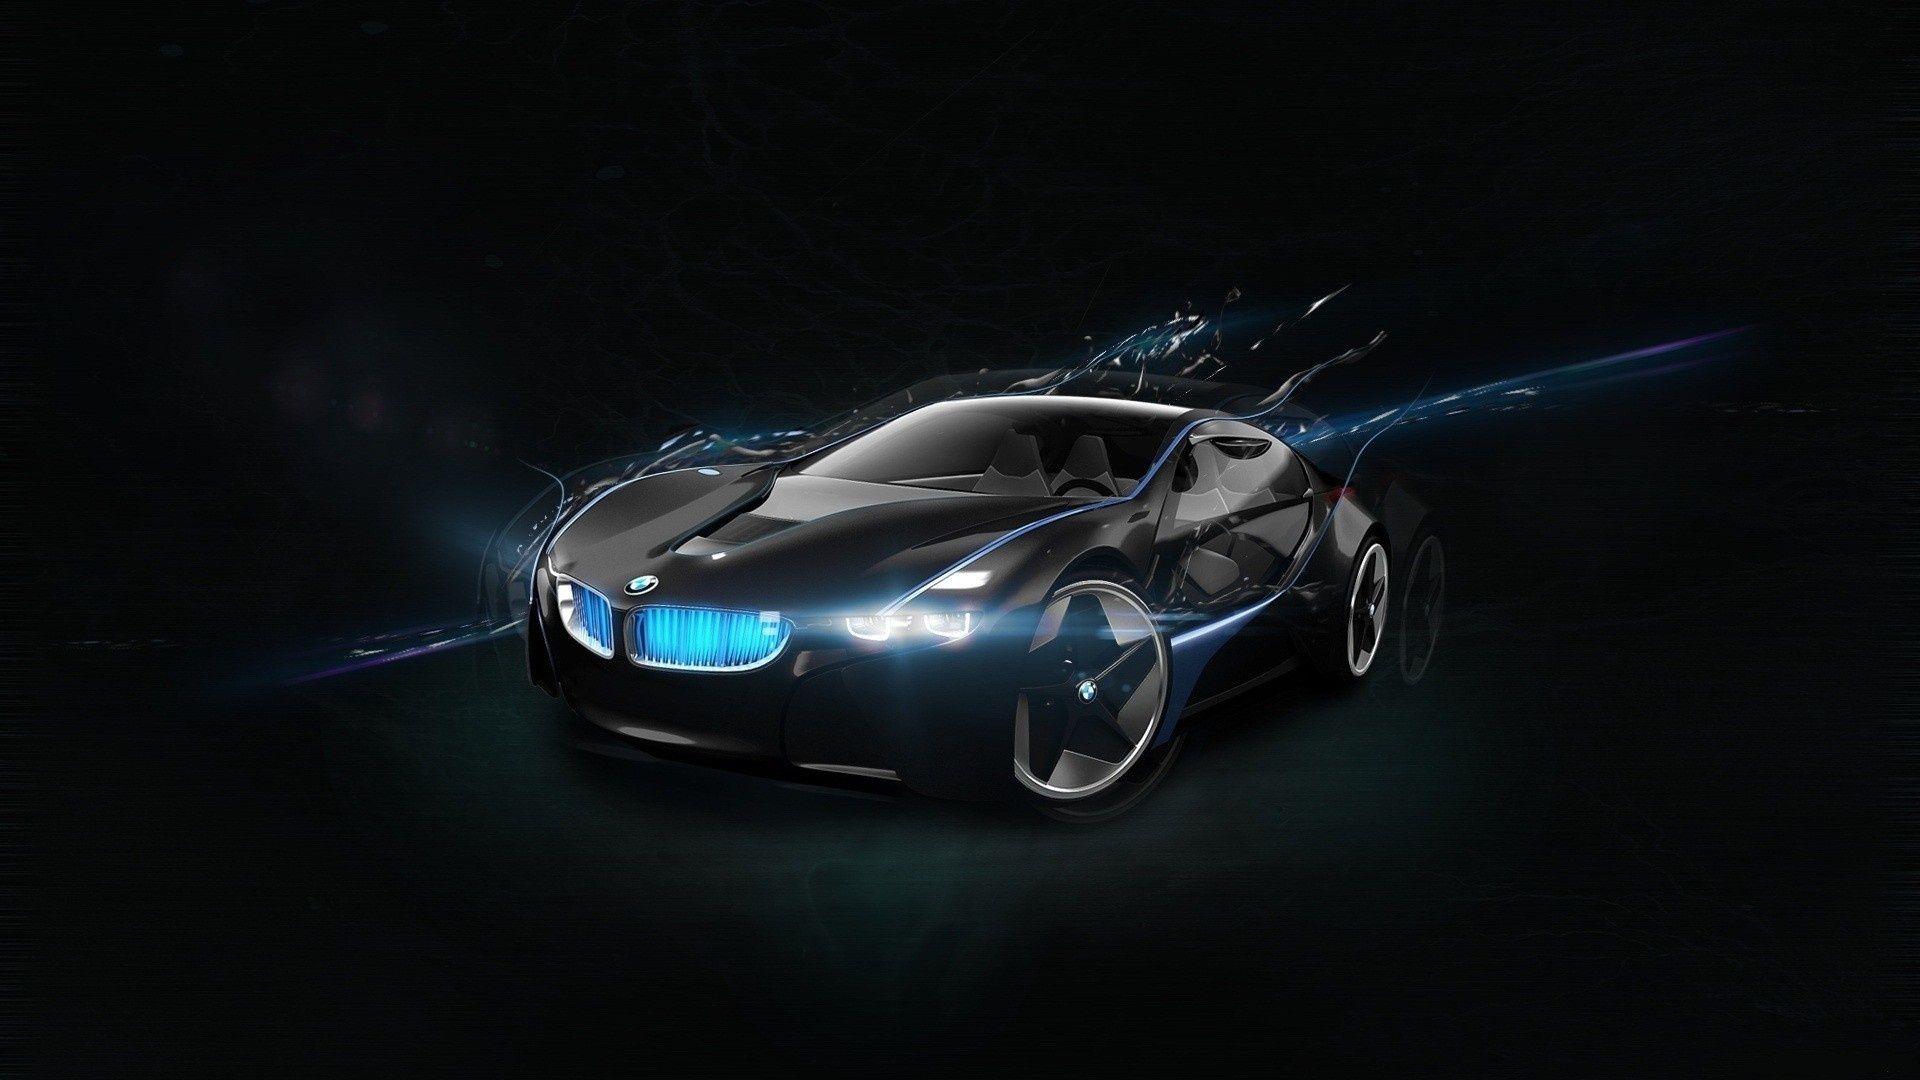 BMW Vision Super Car Wallpaper. Projetos para experimentar